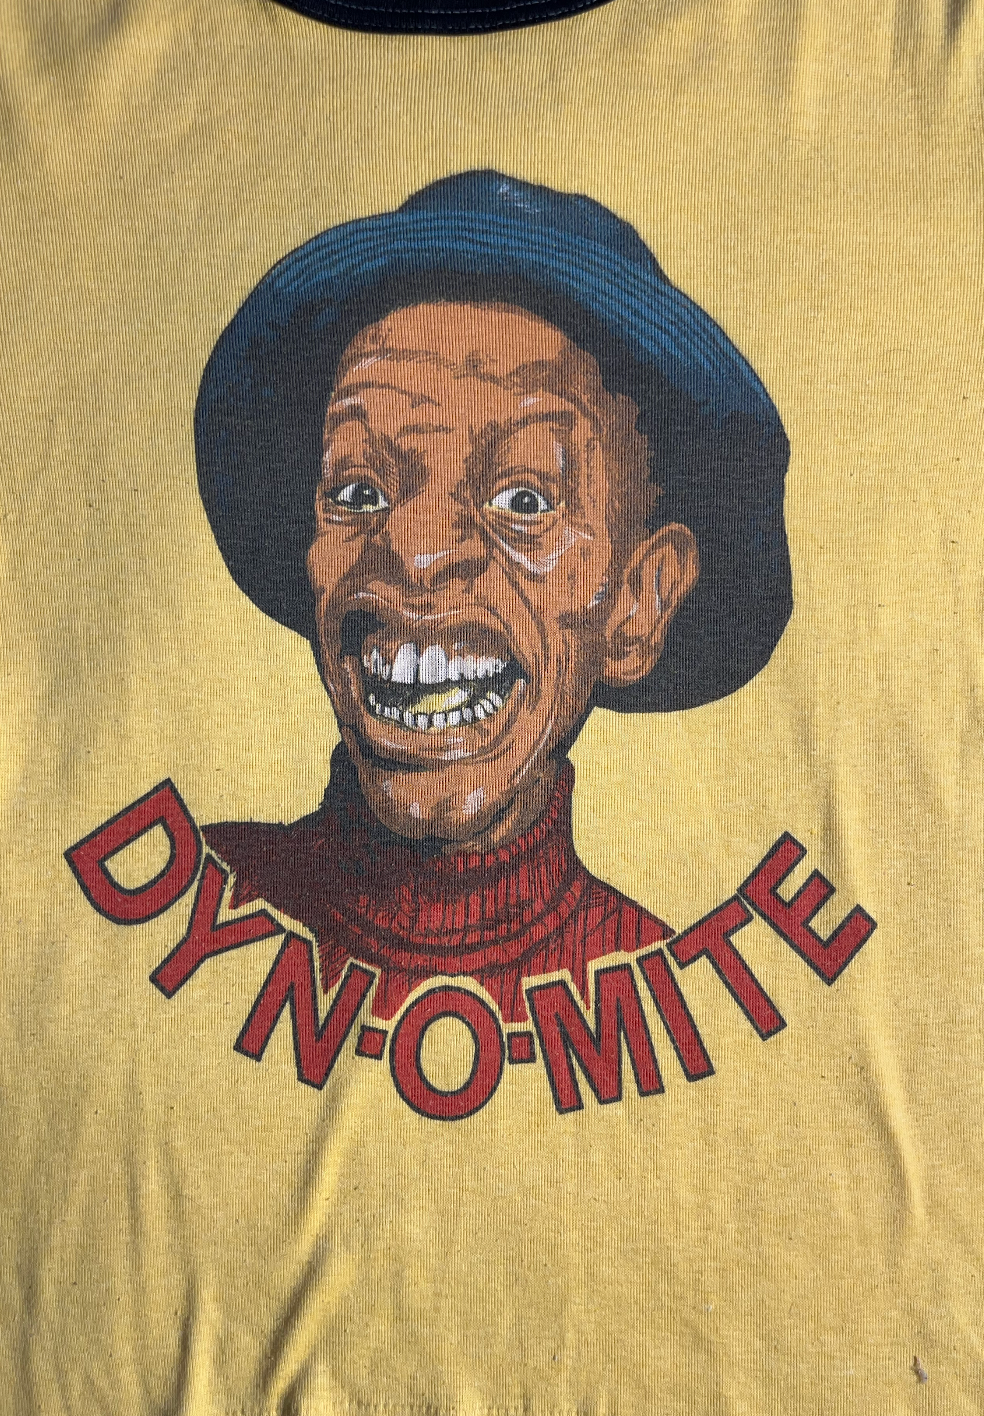 Vintage Dyn-O-Mite T-Shirt 1970s Jimmie WALKER GOOD TIMES